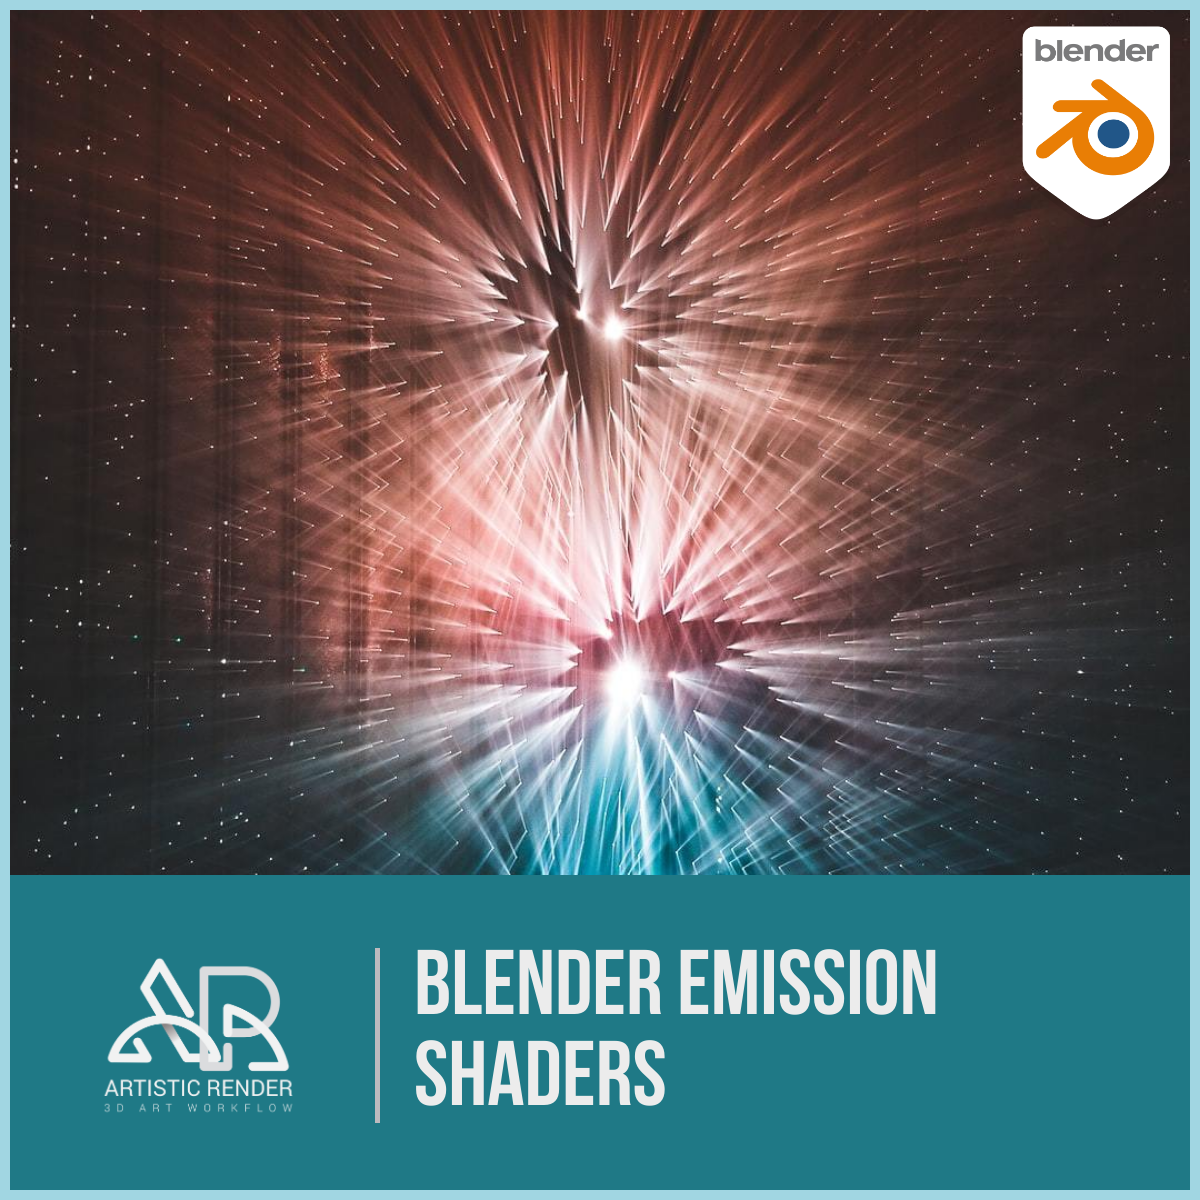 https://artisticrender.com/wp-content/uploads/2021/06/Blender_emission_shaders-1200x1200-feature.png